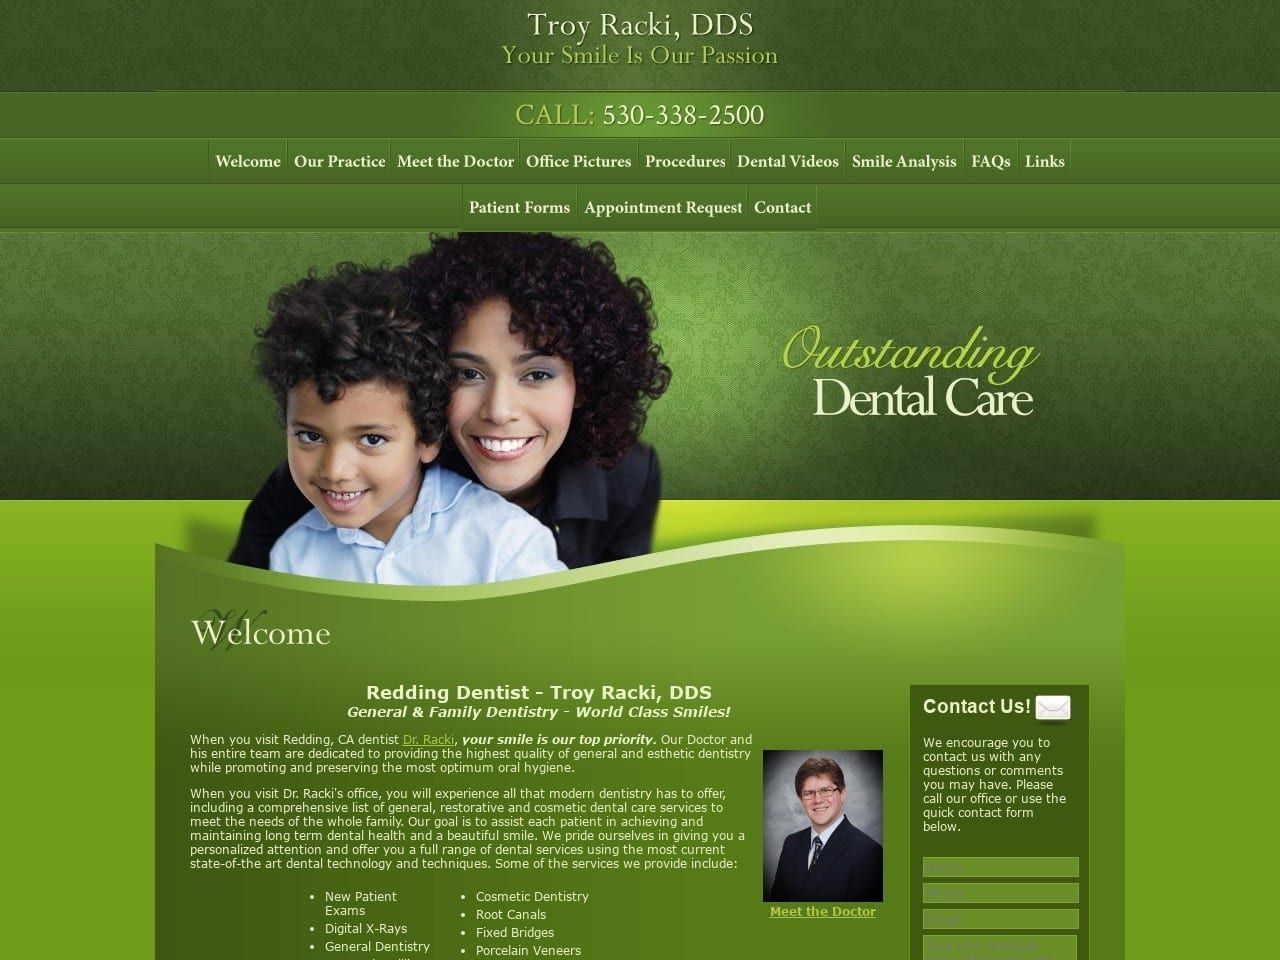 Dr. Troy R. Racki DDS Website Screenshot from reddingfamilydentistry.com